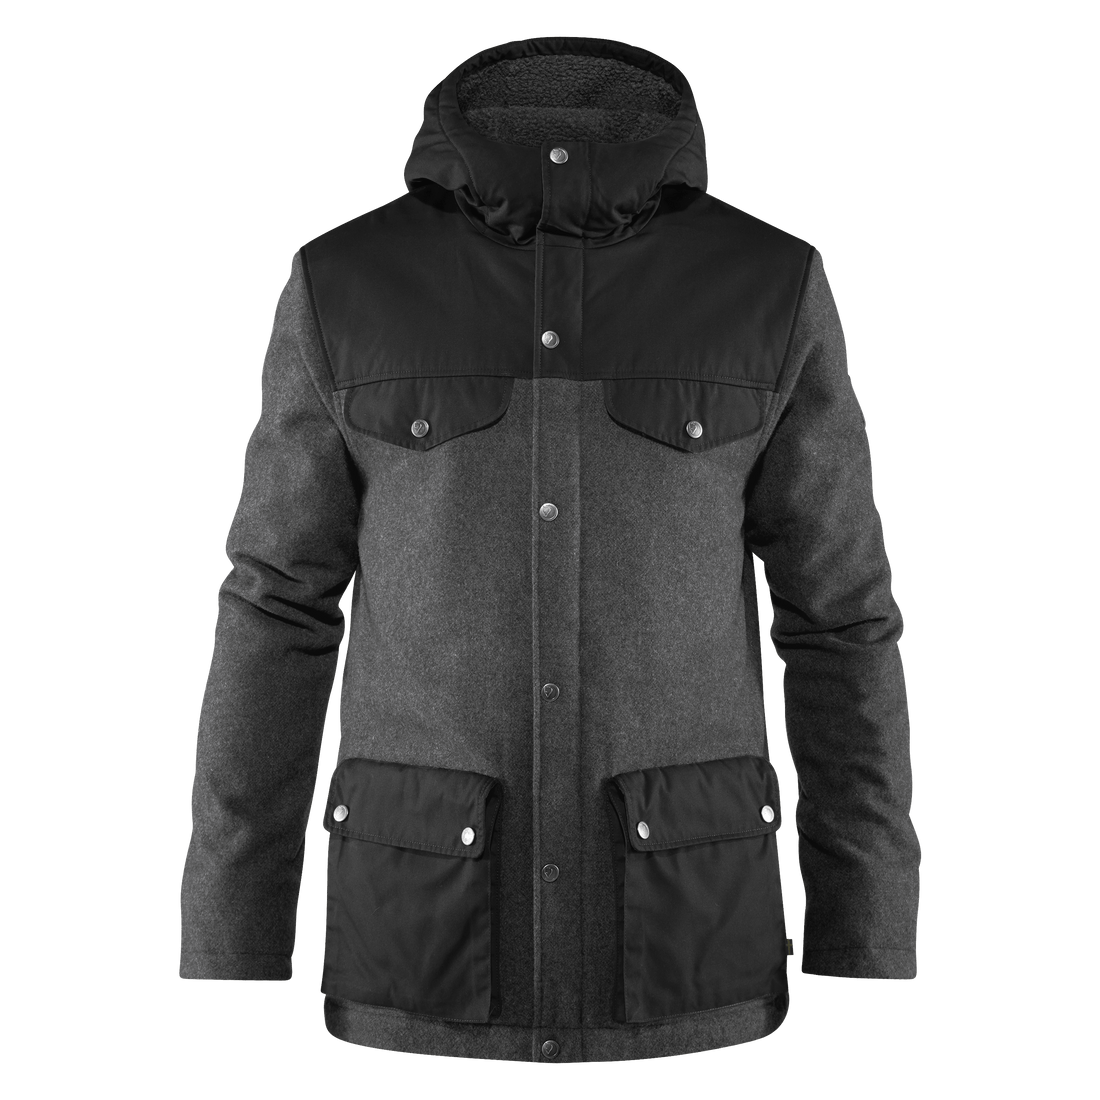 Greenland Re-Wool Jacket M